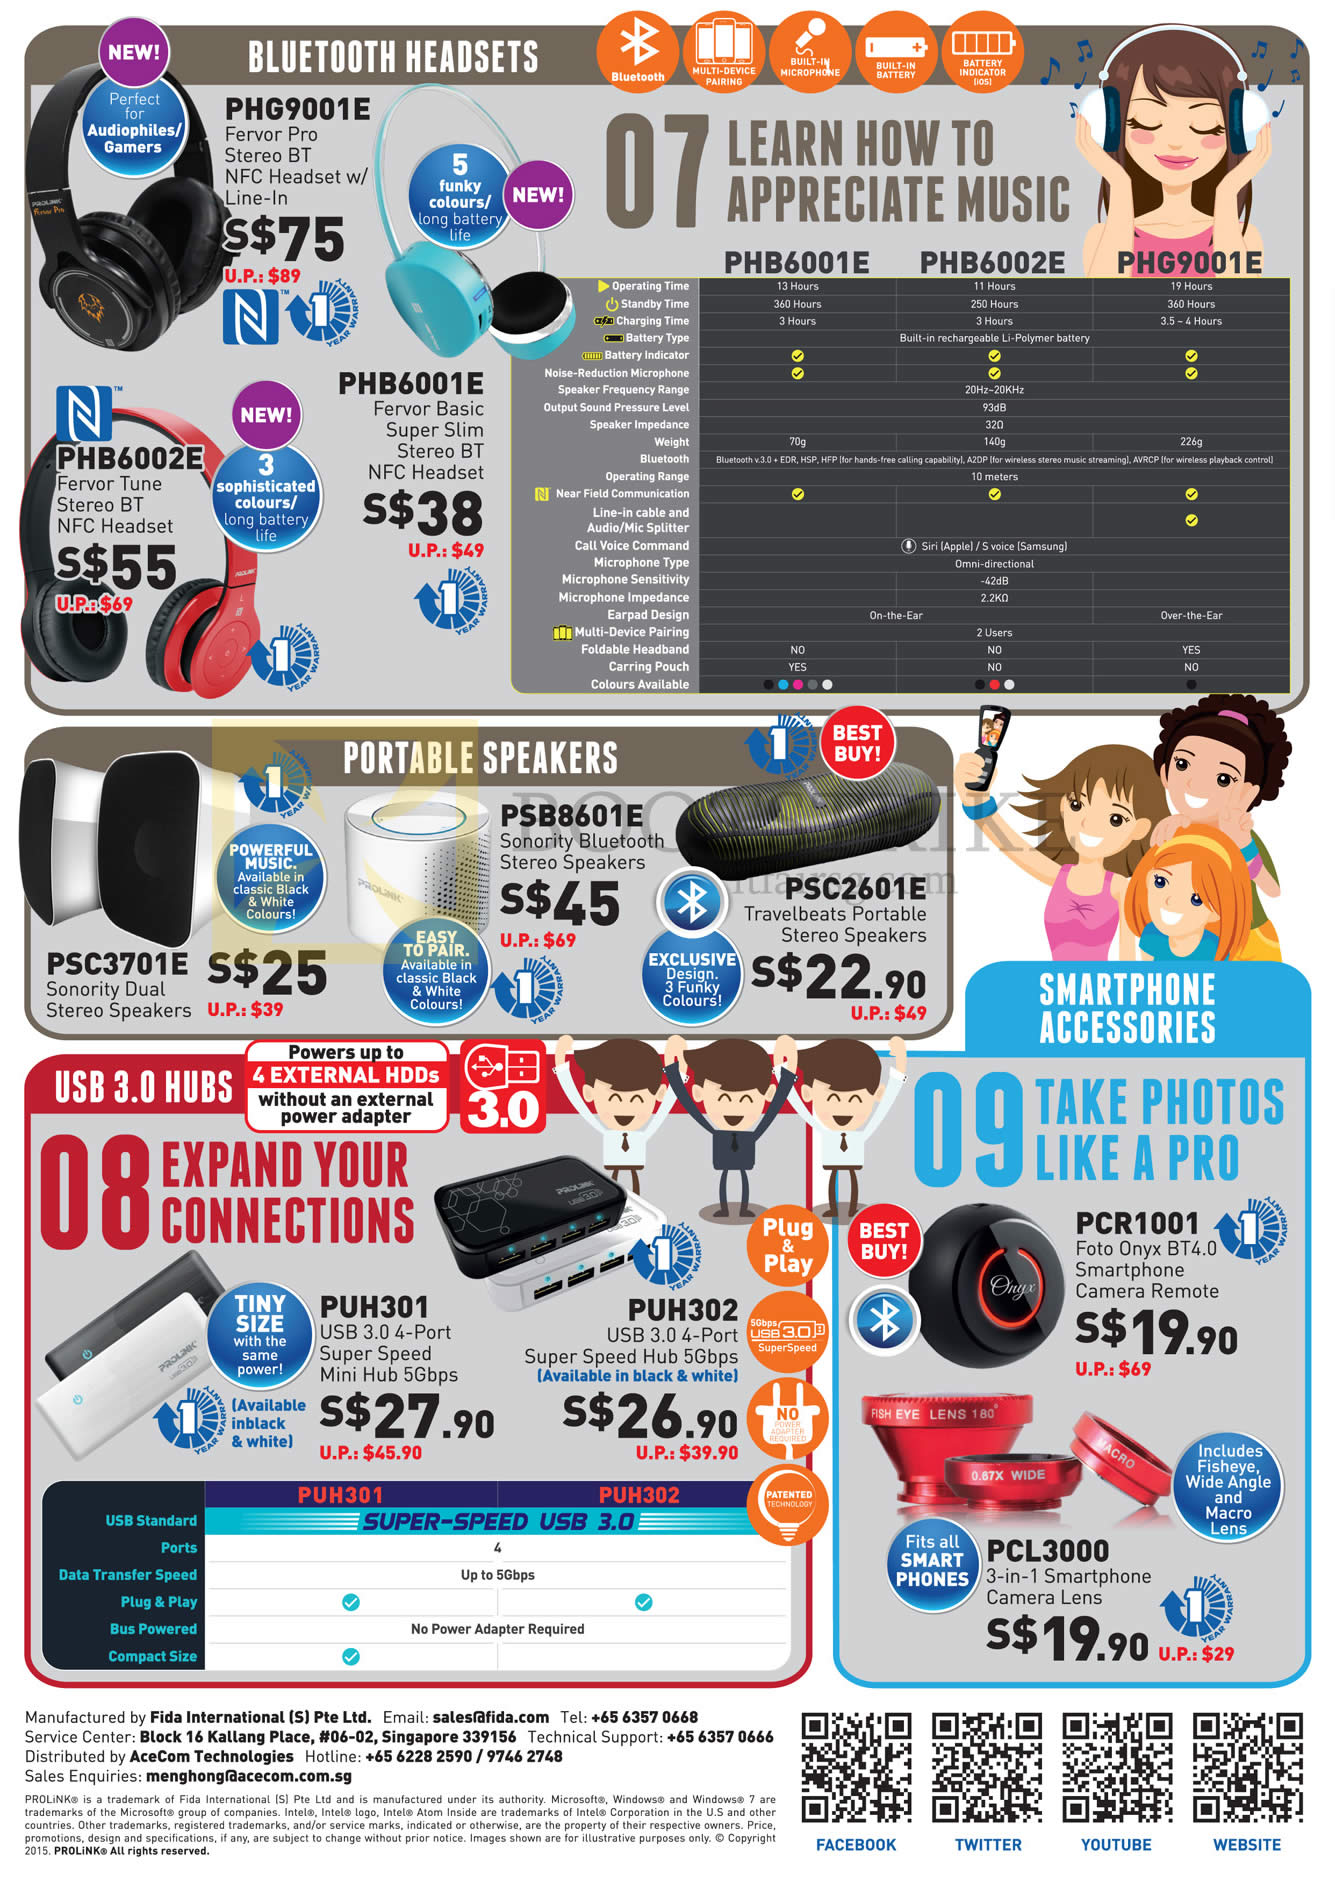 COMEX 2015 price list image brochure of Prolink Bluetooth Headsets, Portable Speakers, Smartphone Accessories, PHG9001E, PHB6001E, PHB6002E, PSC3701E, PSC2602E, PUH301, PCR1001, PCL3000